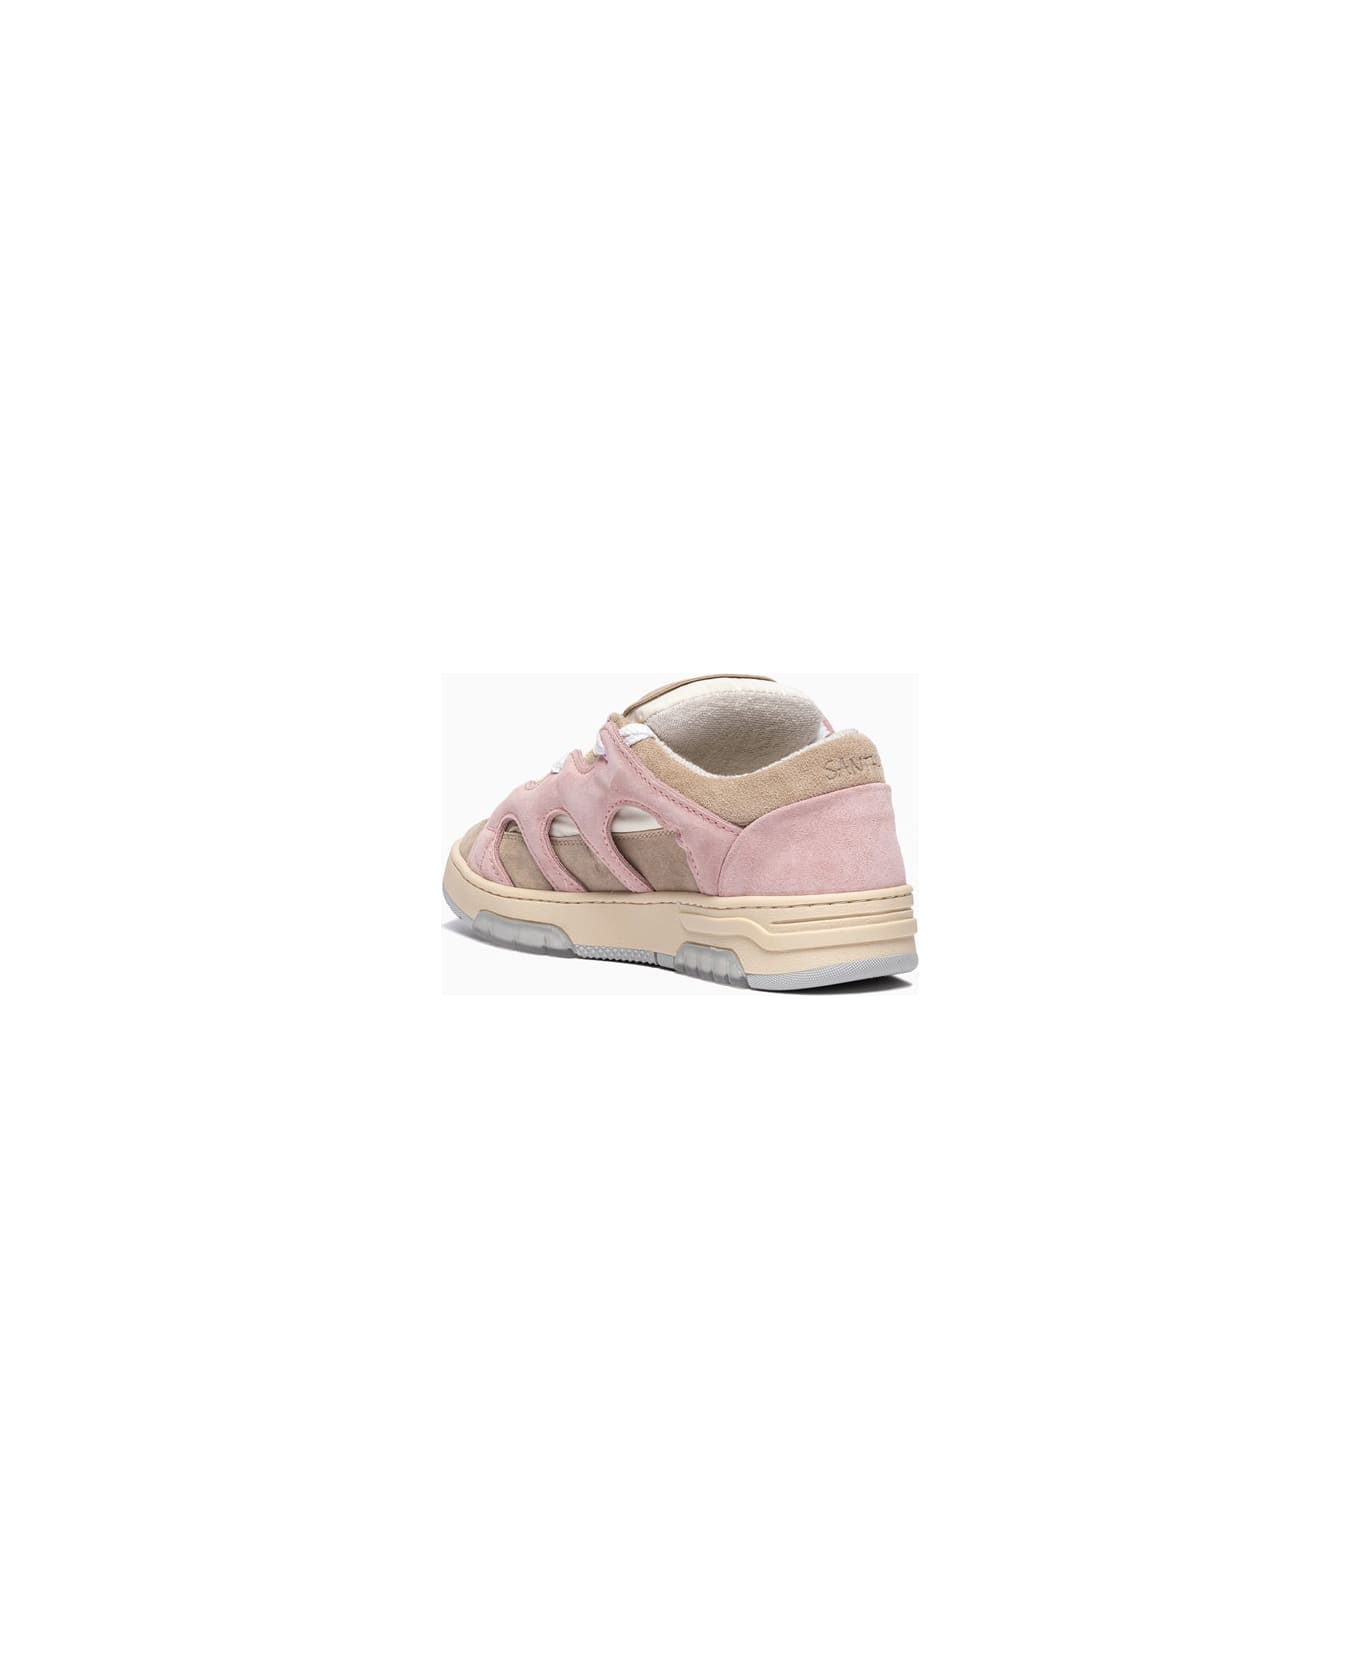 Paura Santha Sneakers - Pink/dove